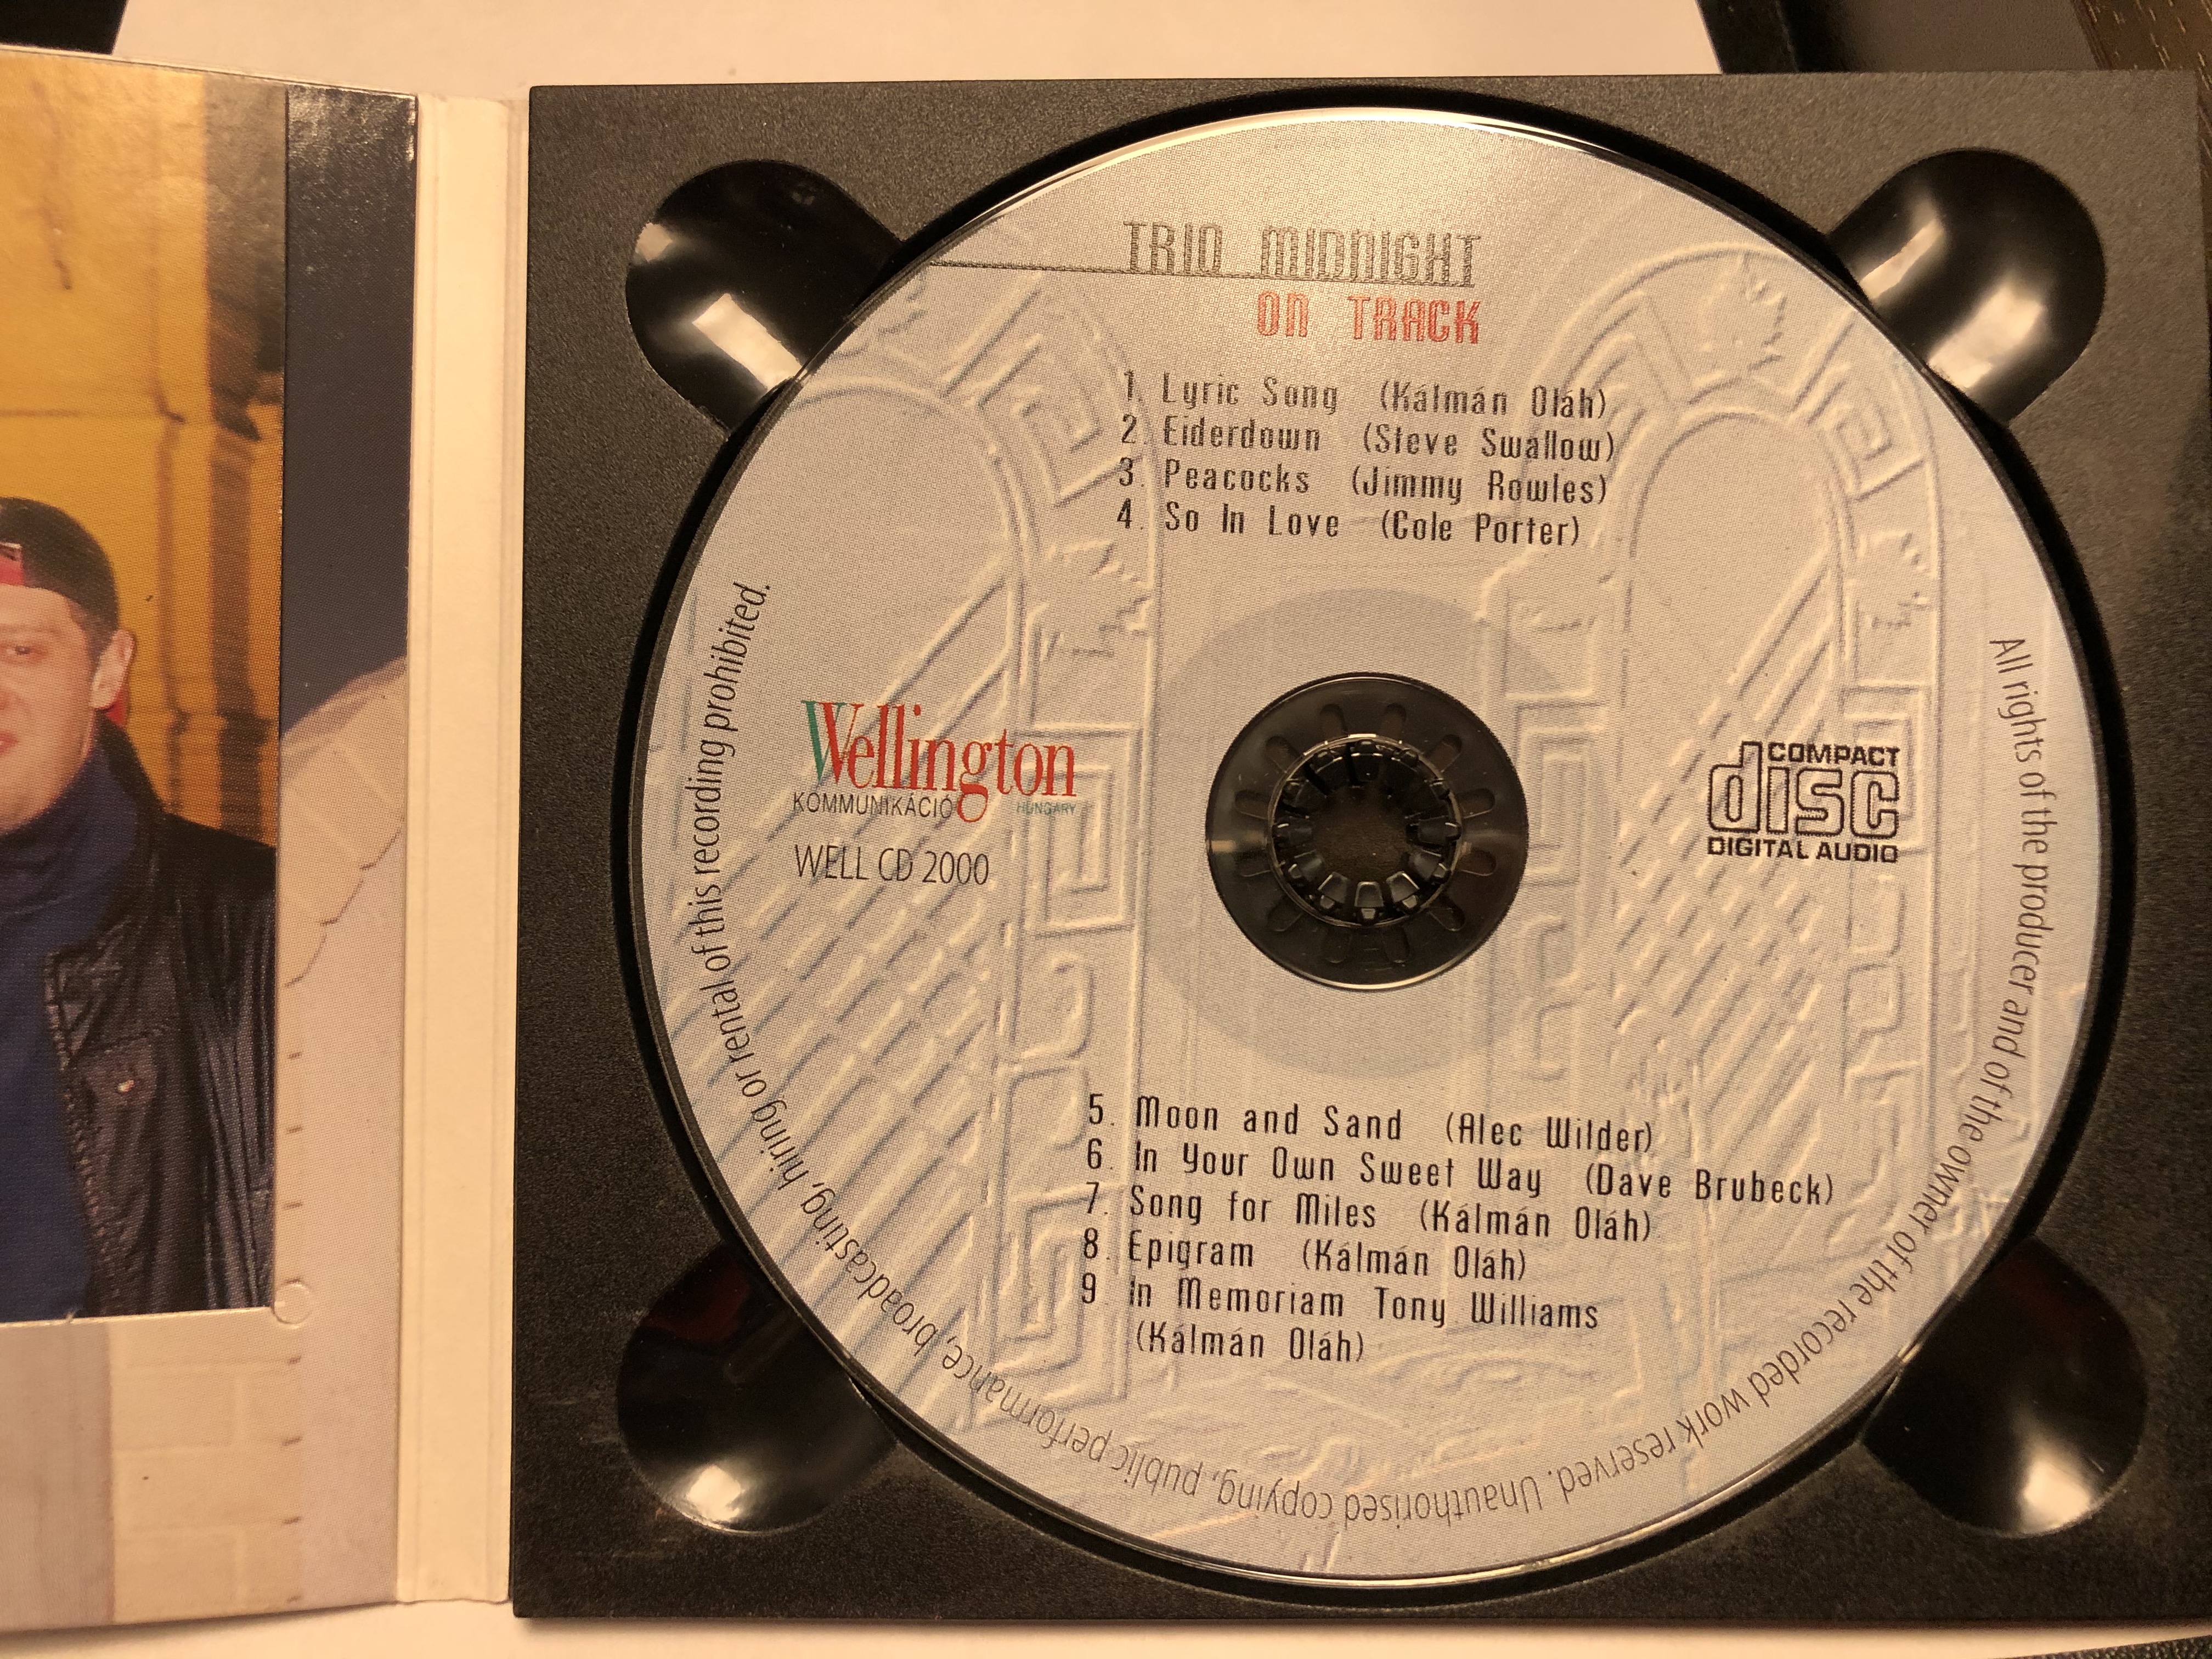 trio-midnight-on-track-featuring-lee-konitz-wellington-kommunik-ci-audio-cd-well-cd-2000-3-.jpg